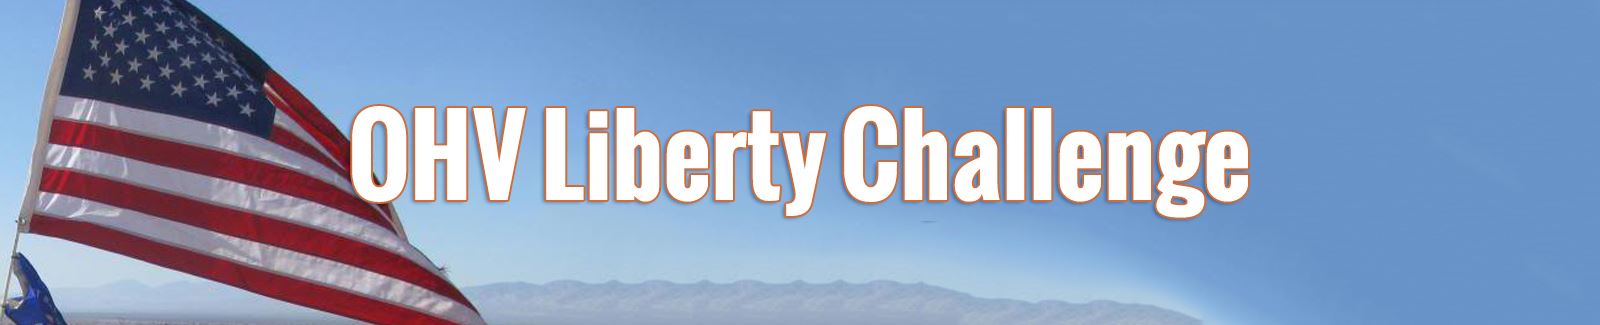 OHV Liberty Challenge